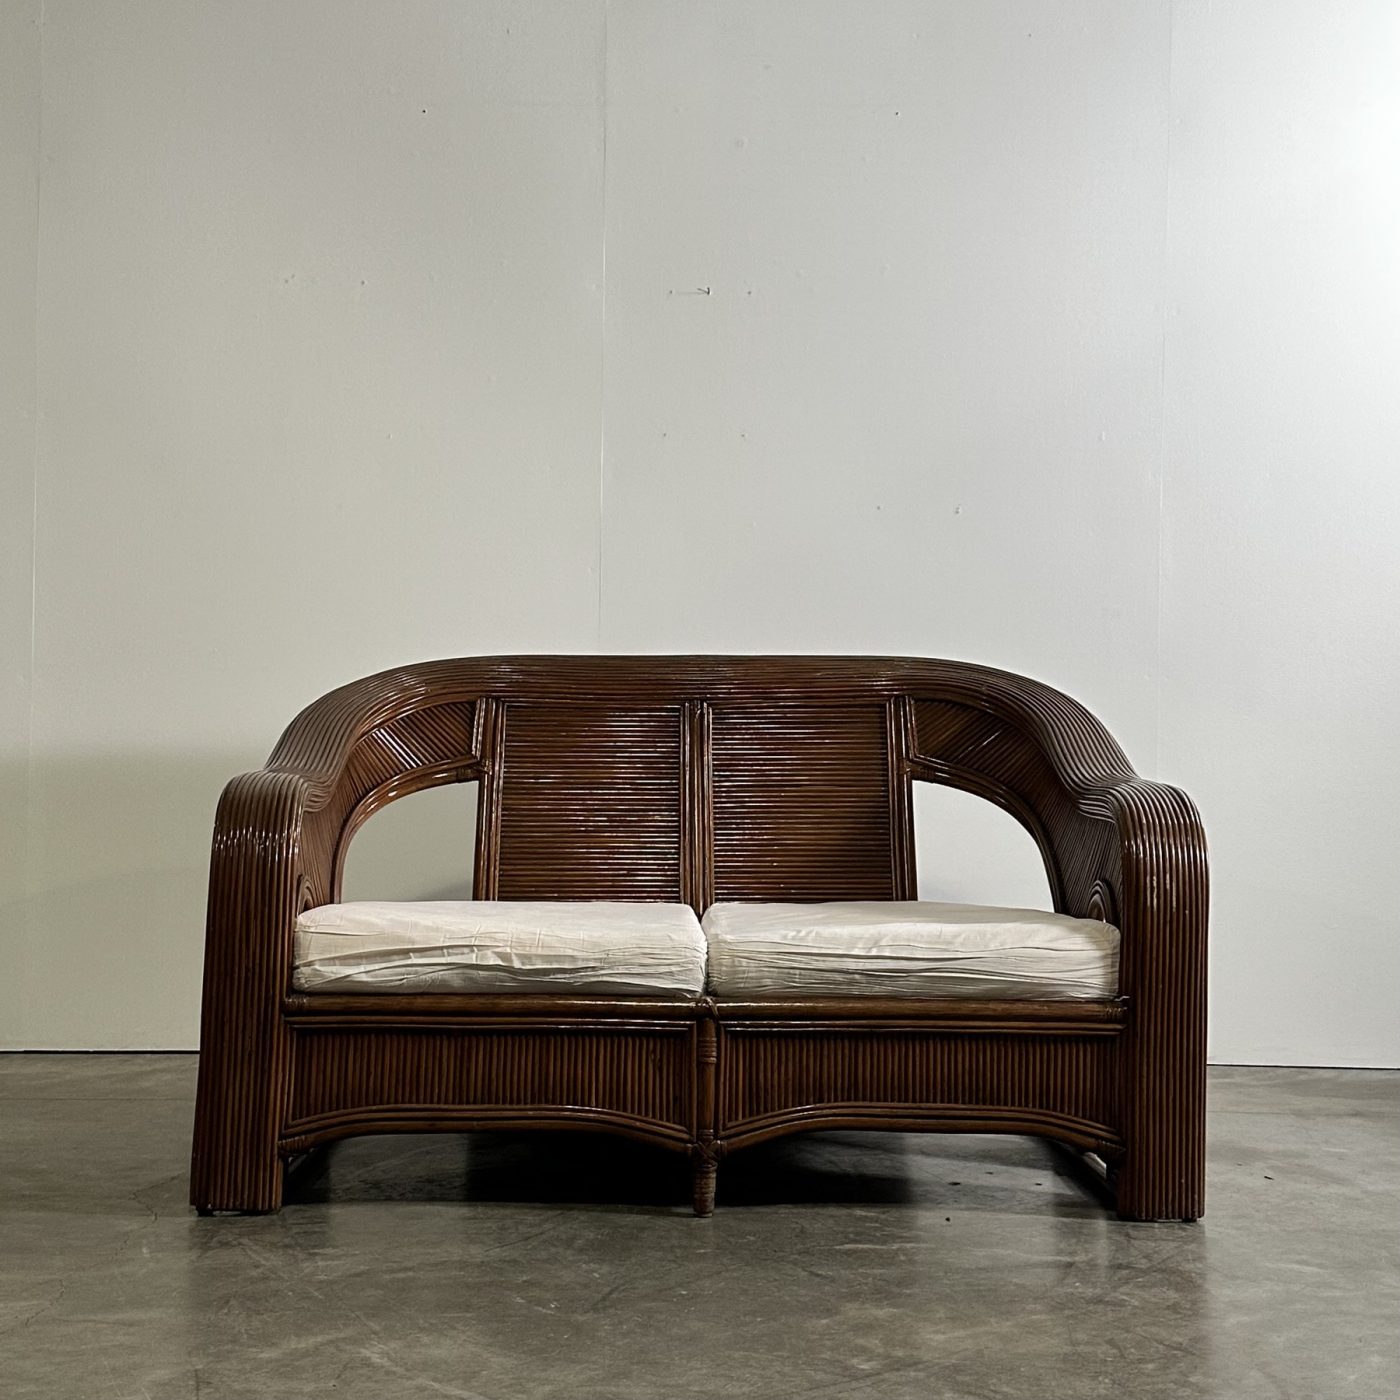 objet-vagabond-rattan-sofa0003